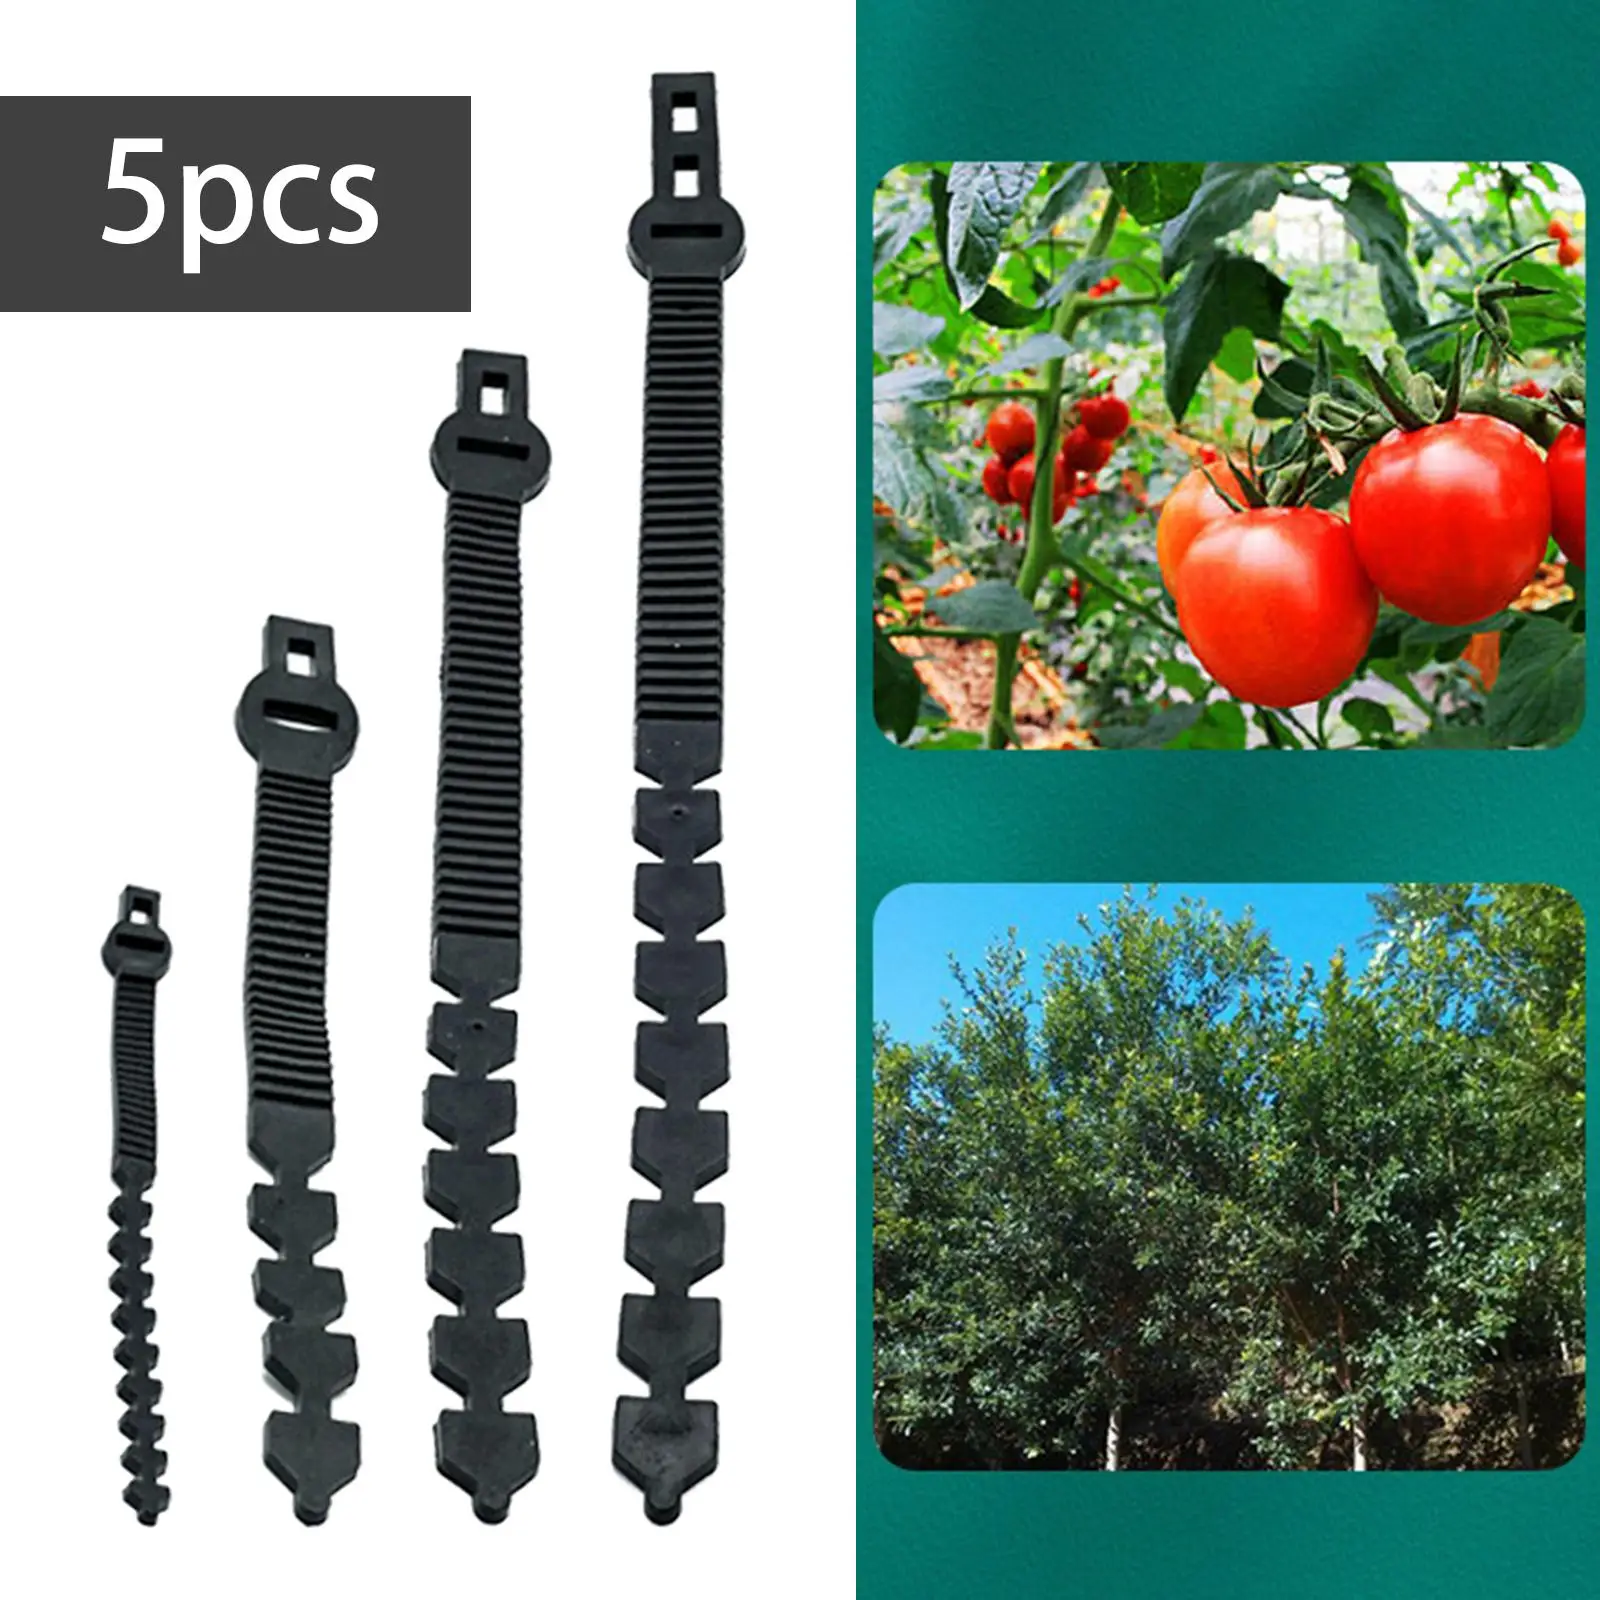 5x Adjustable Interlock Garden Tree Ties Locking Strap Tree Ties Straps Supports for Outdoor Tree Plant Support Garden